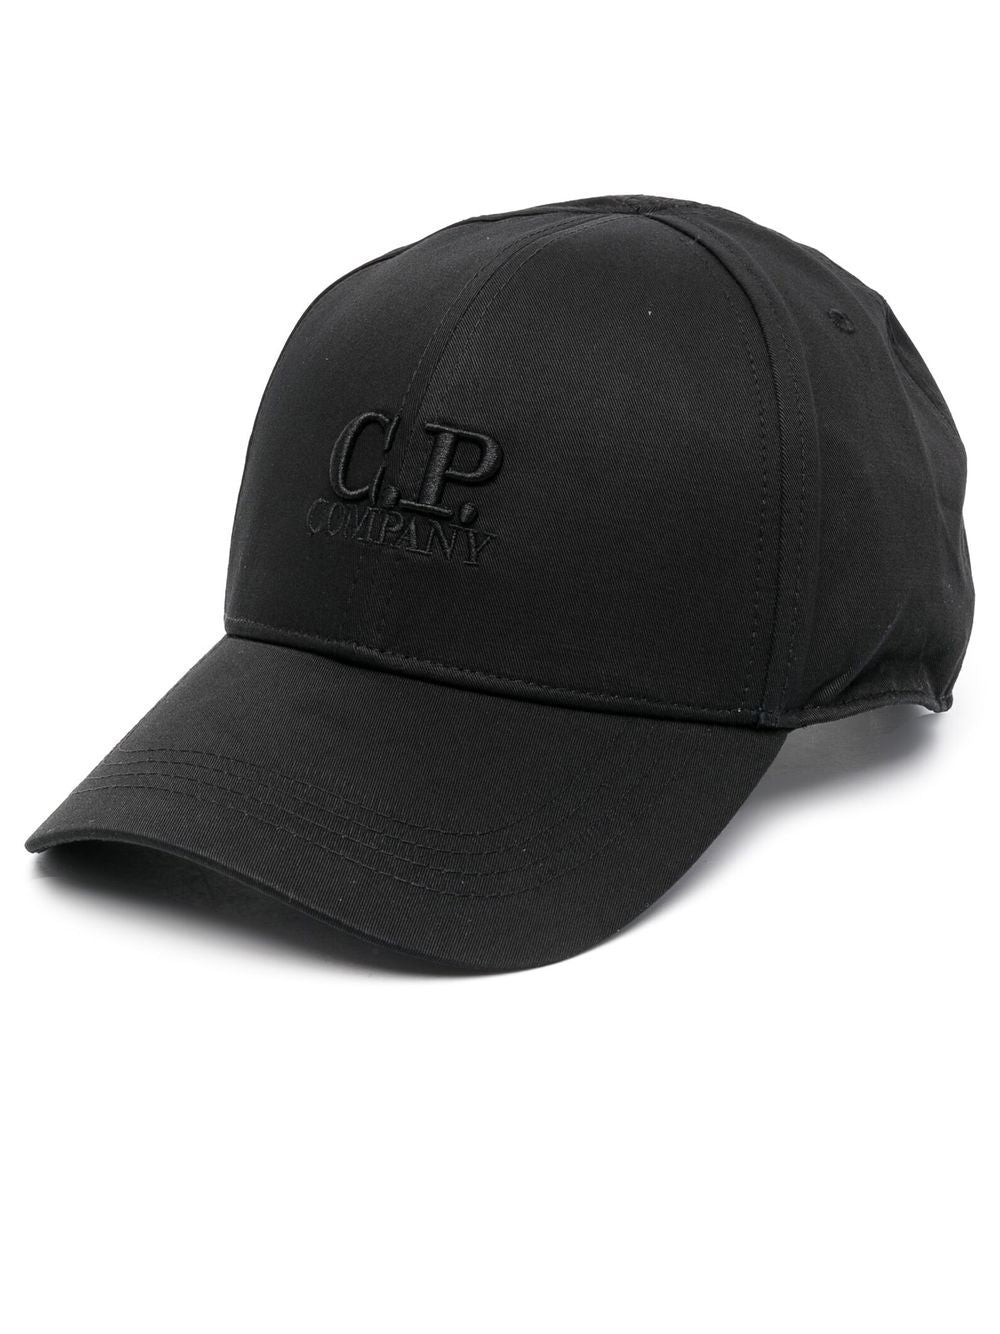 C.P. COMPANY Logo Embroidered Cap Black